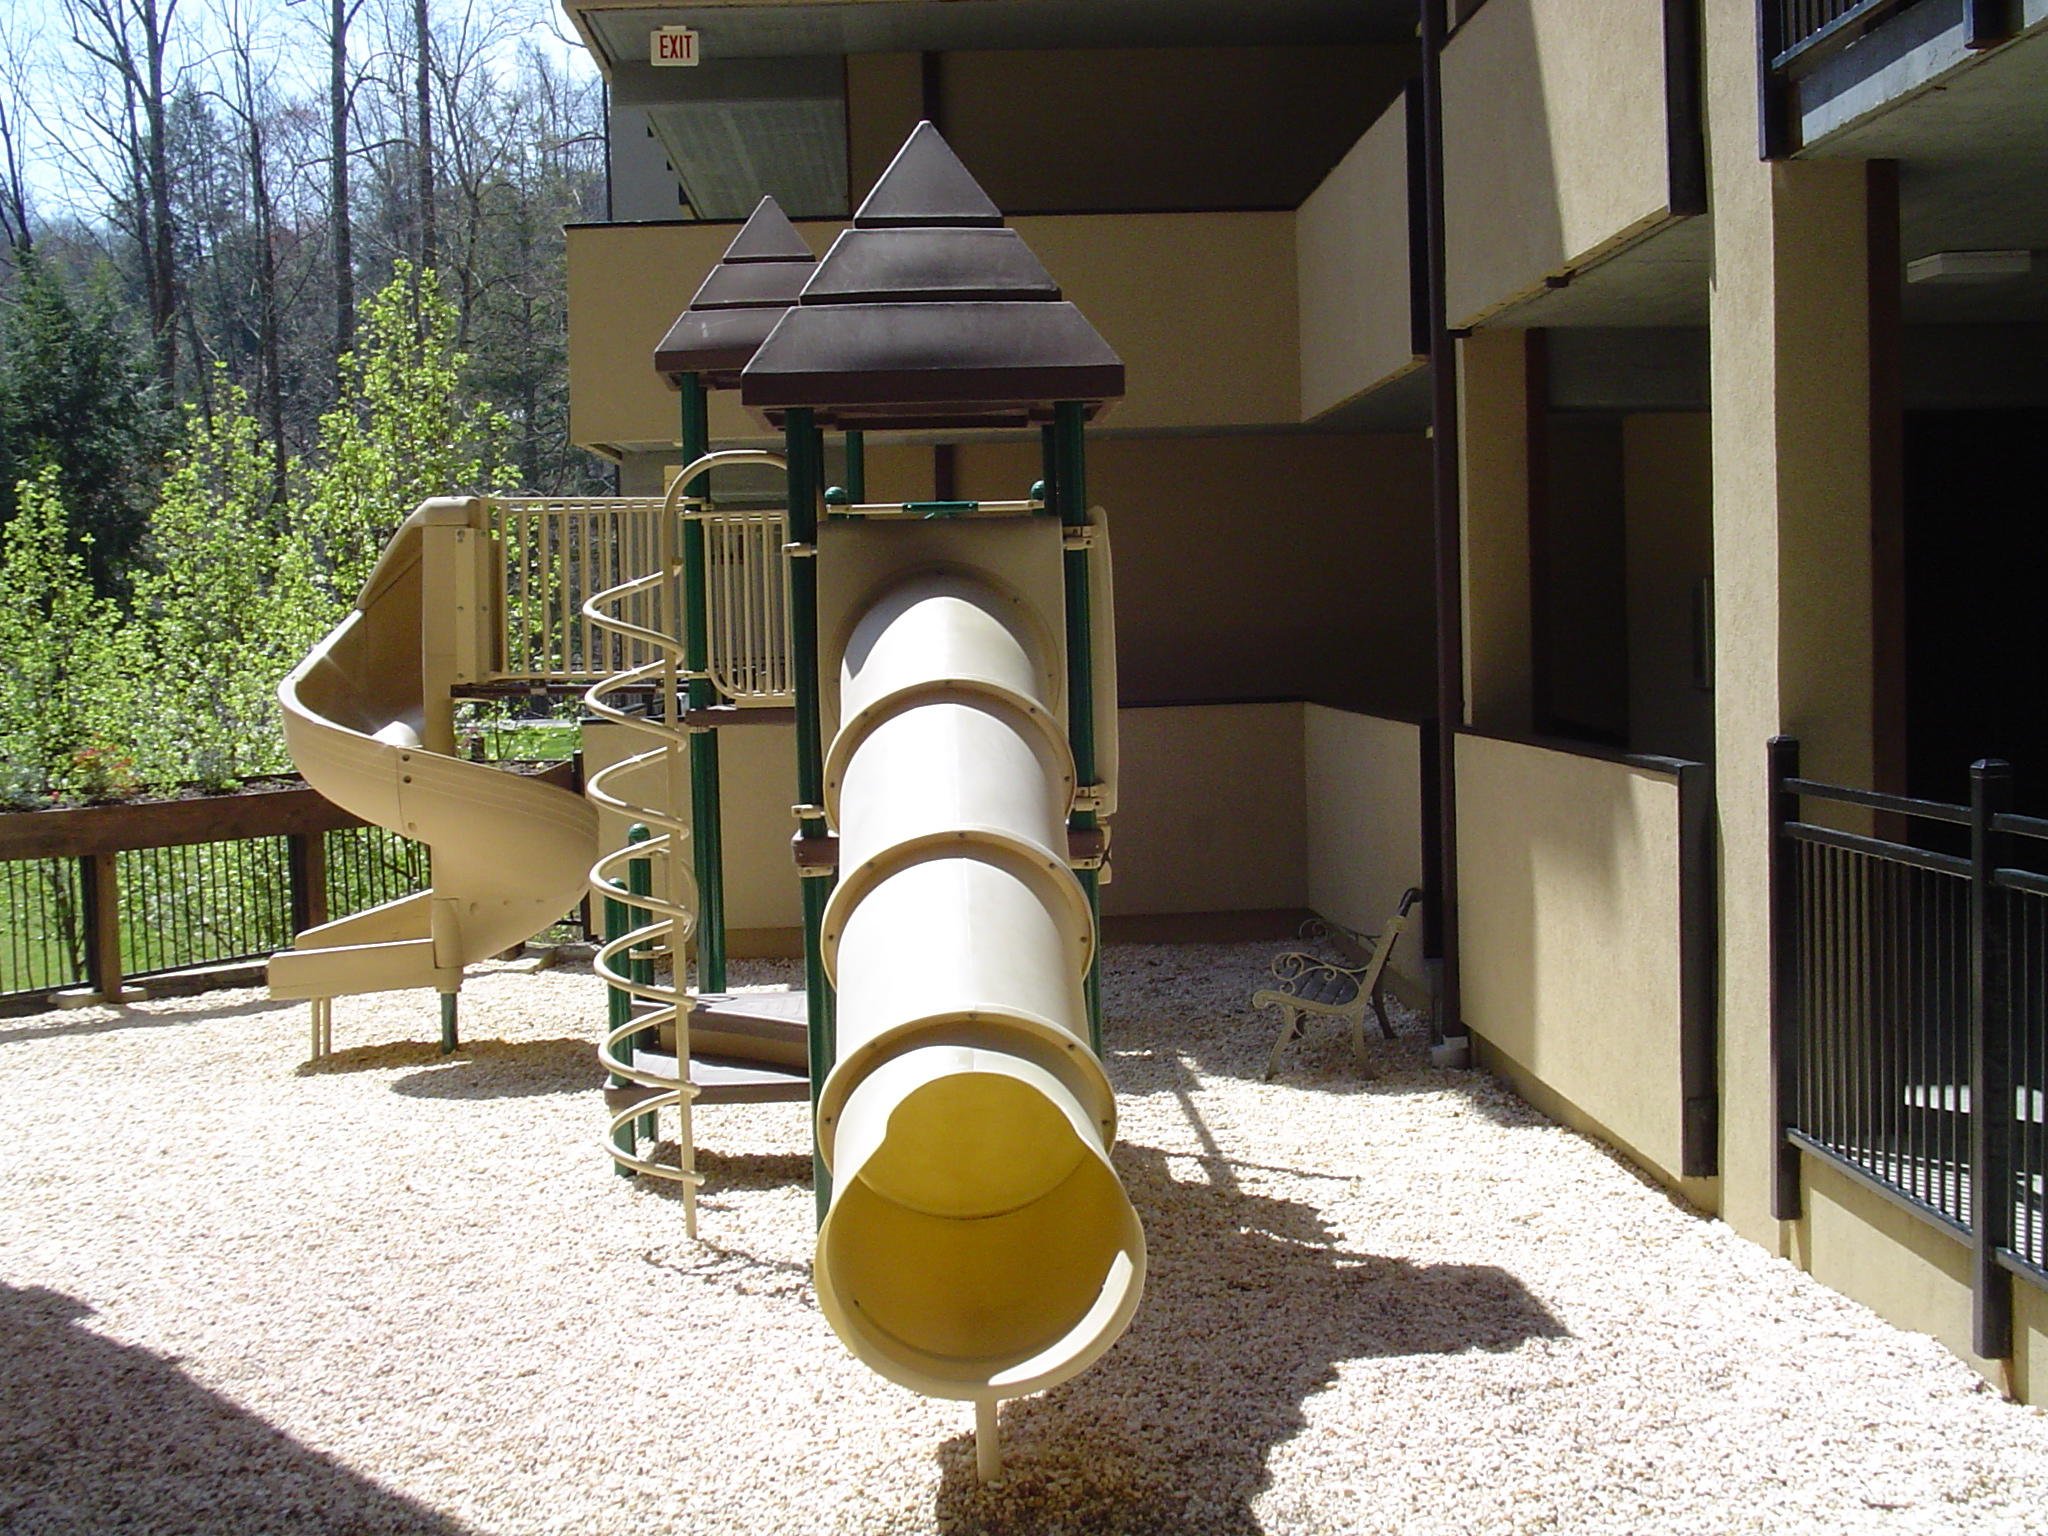 Gatlinburg Town Square - Children's Play Area